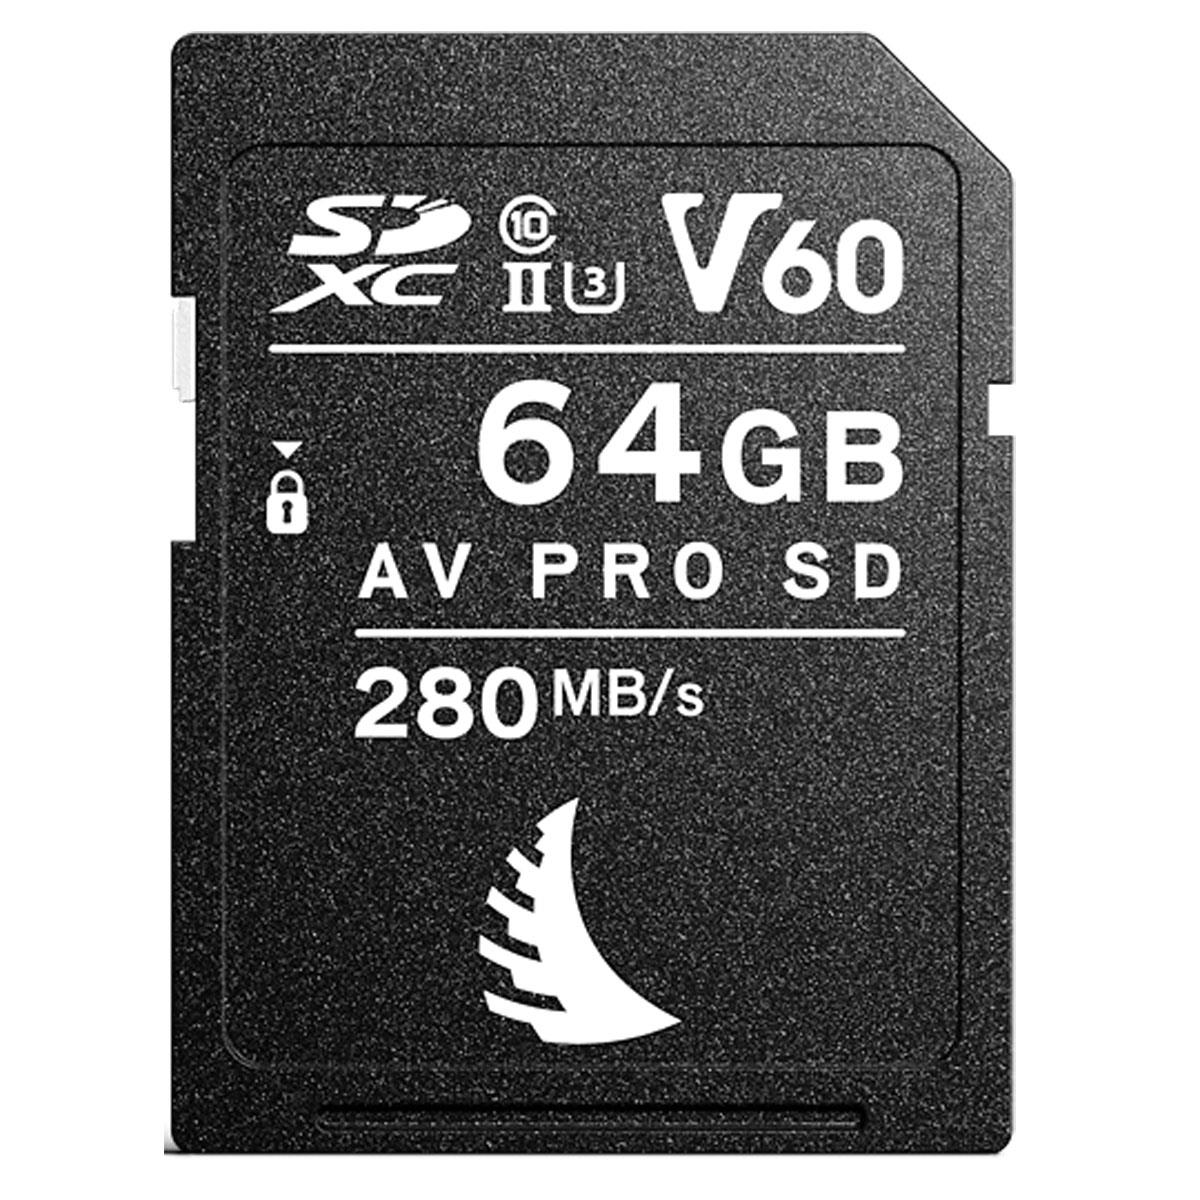 Image of Angelbird AV PRO SD MK2 V60 64GB SDXC UHS-II Memory Card